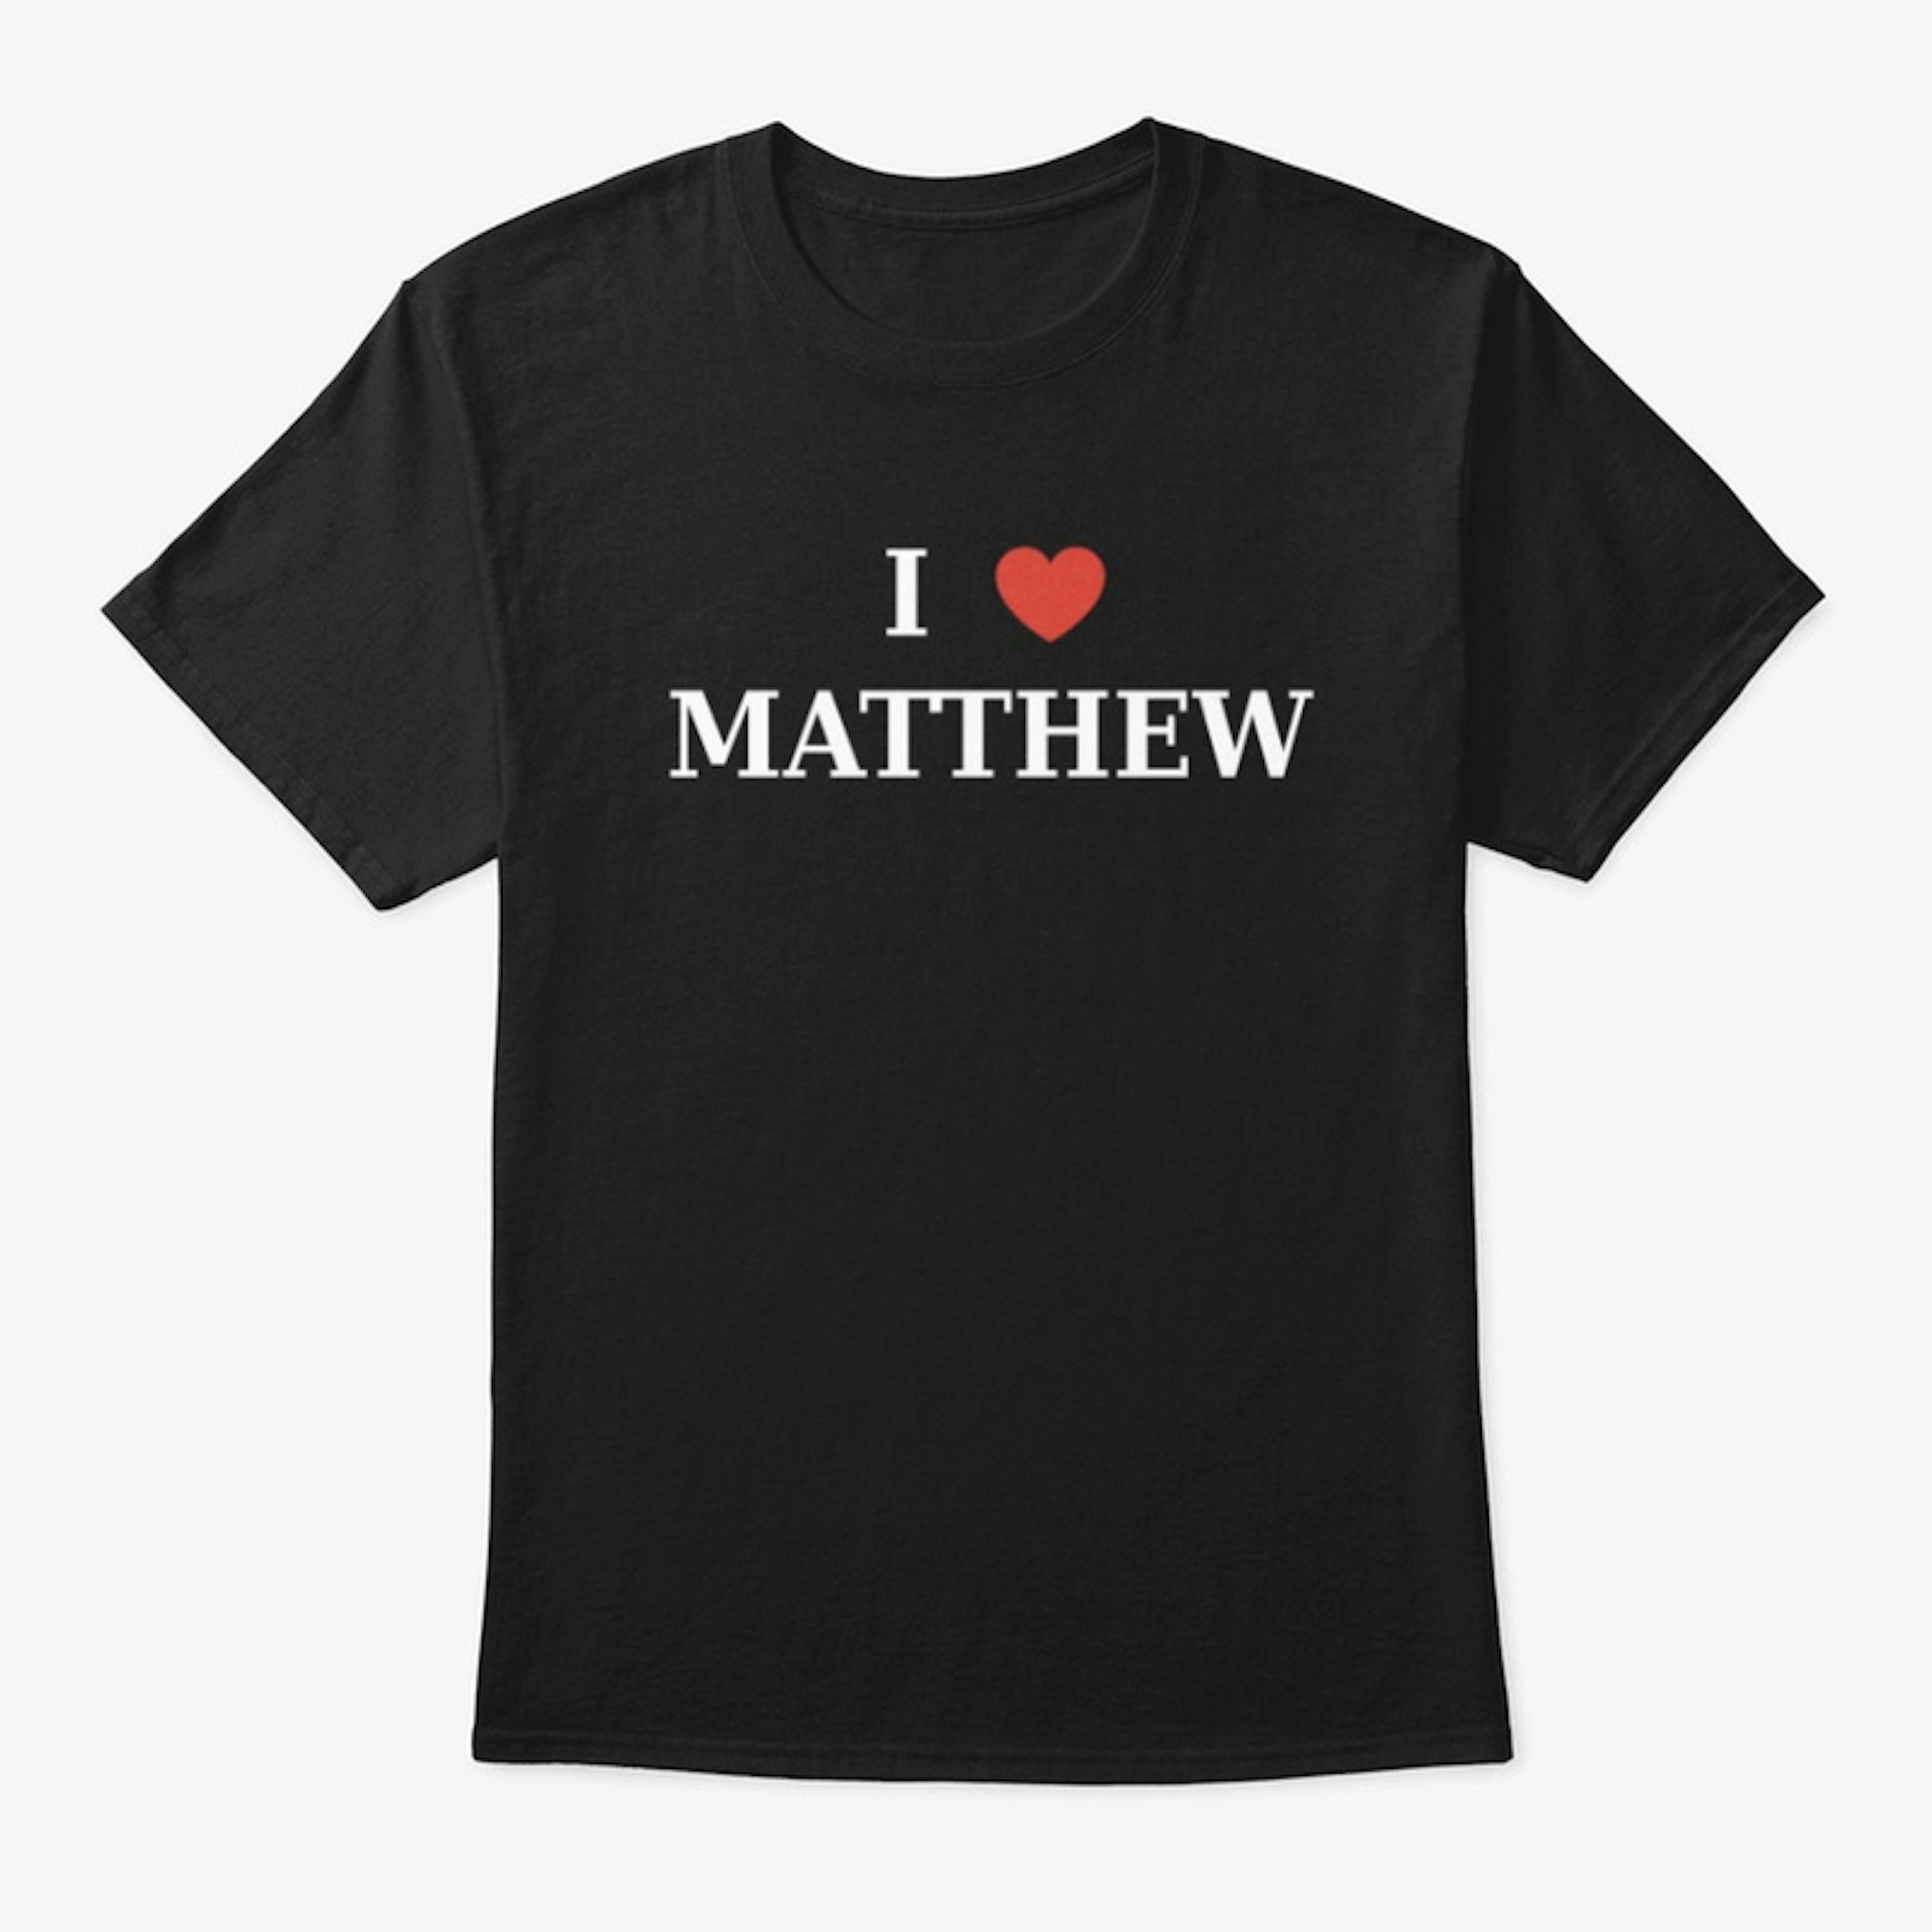 Matthew - Black